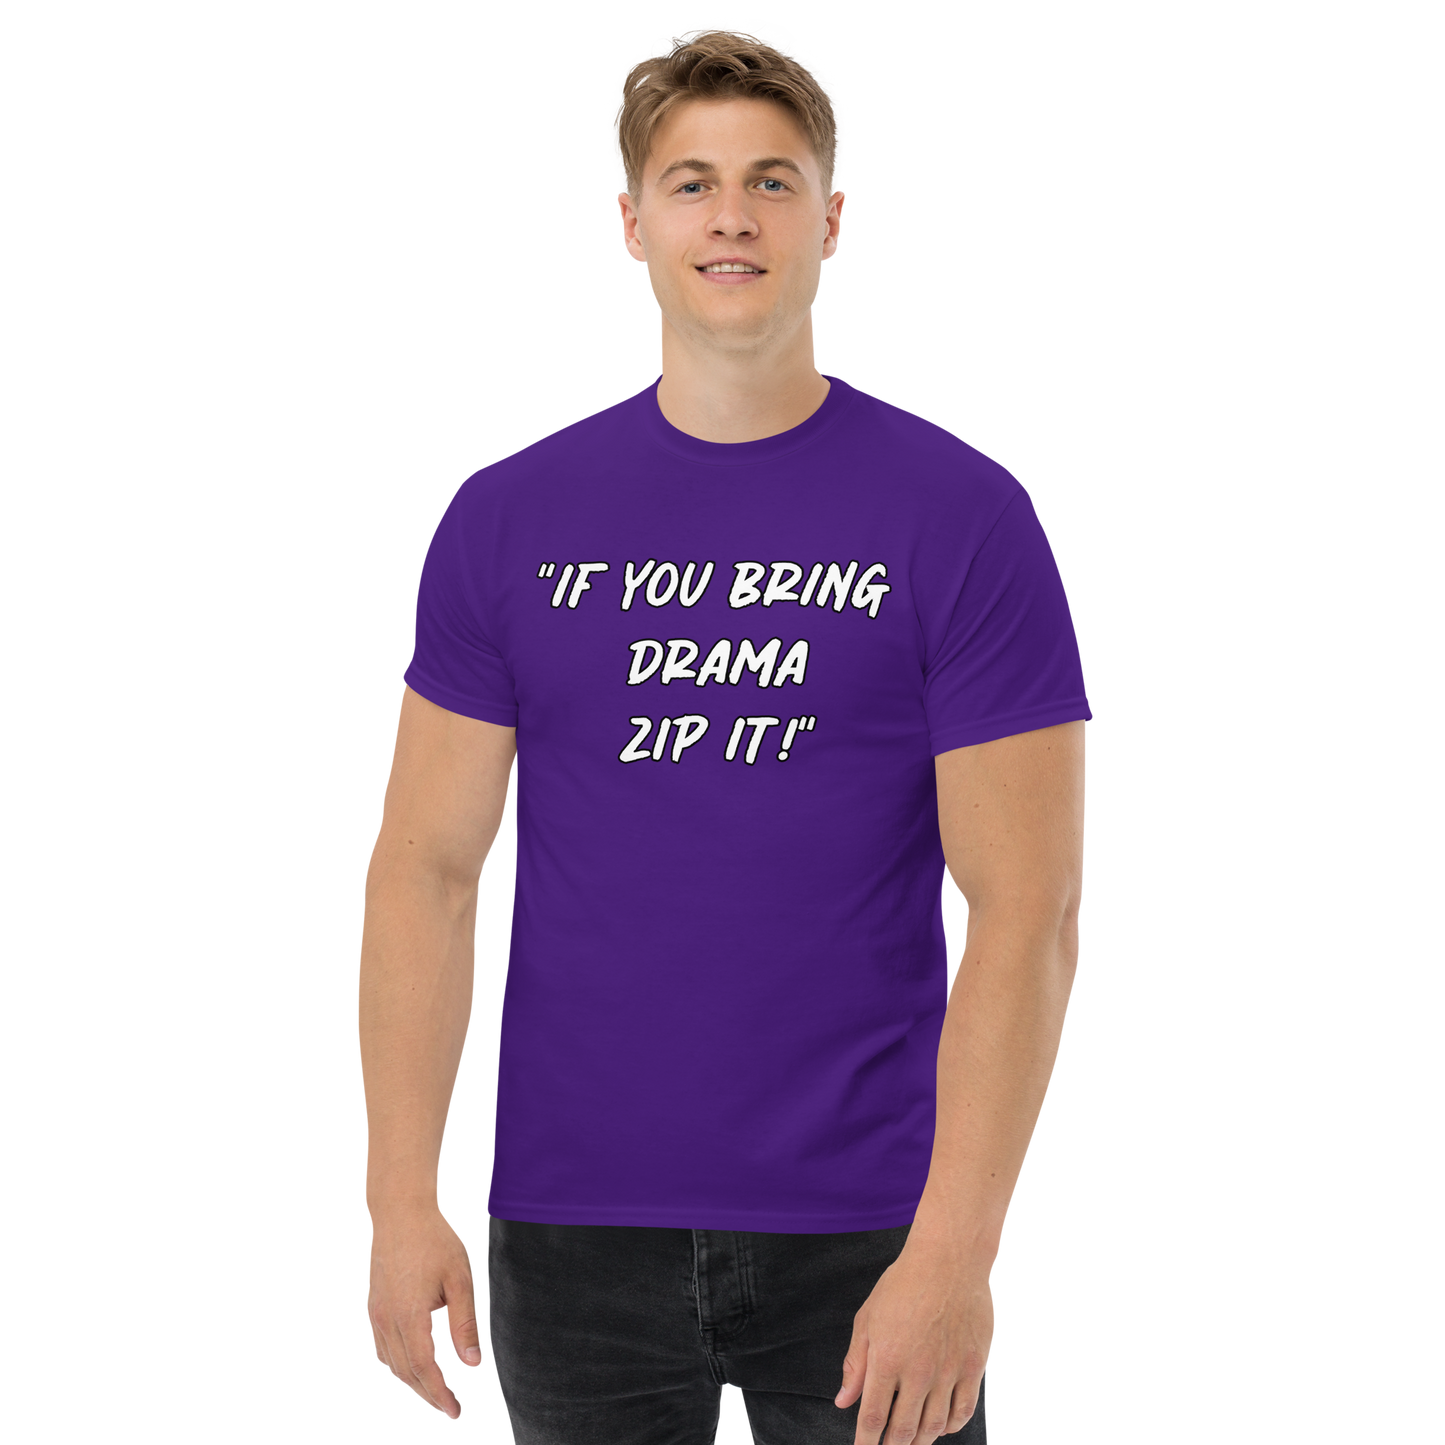 Bring Drama Zip It T-shirt